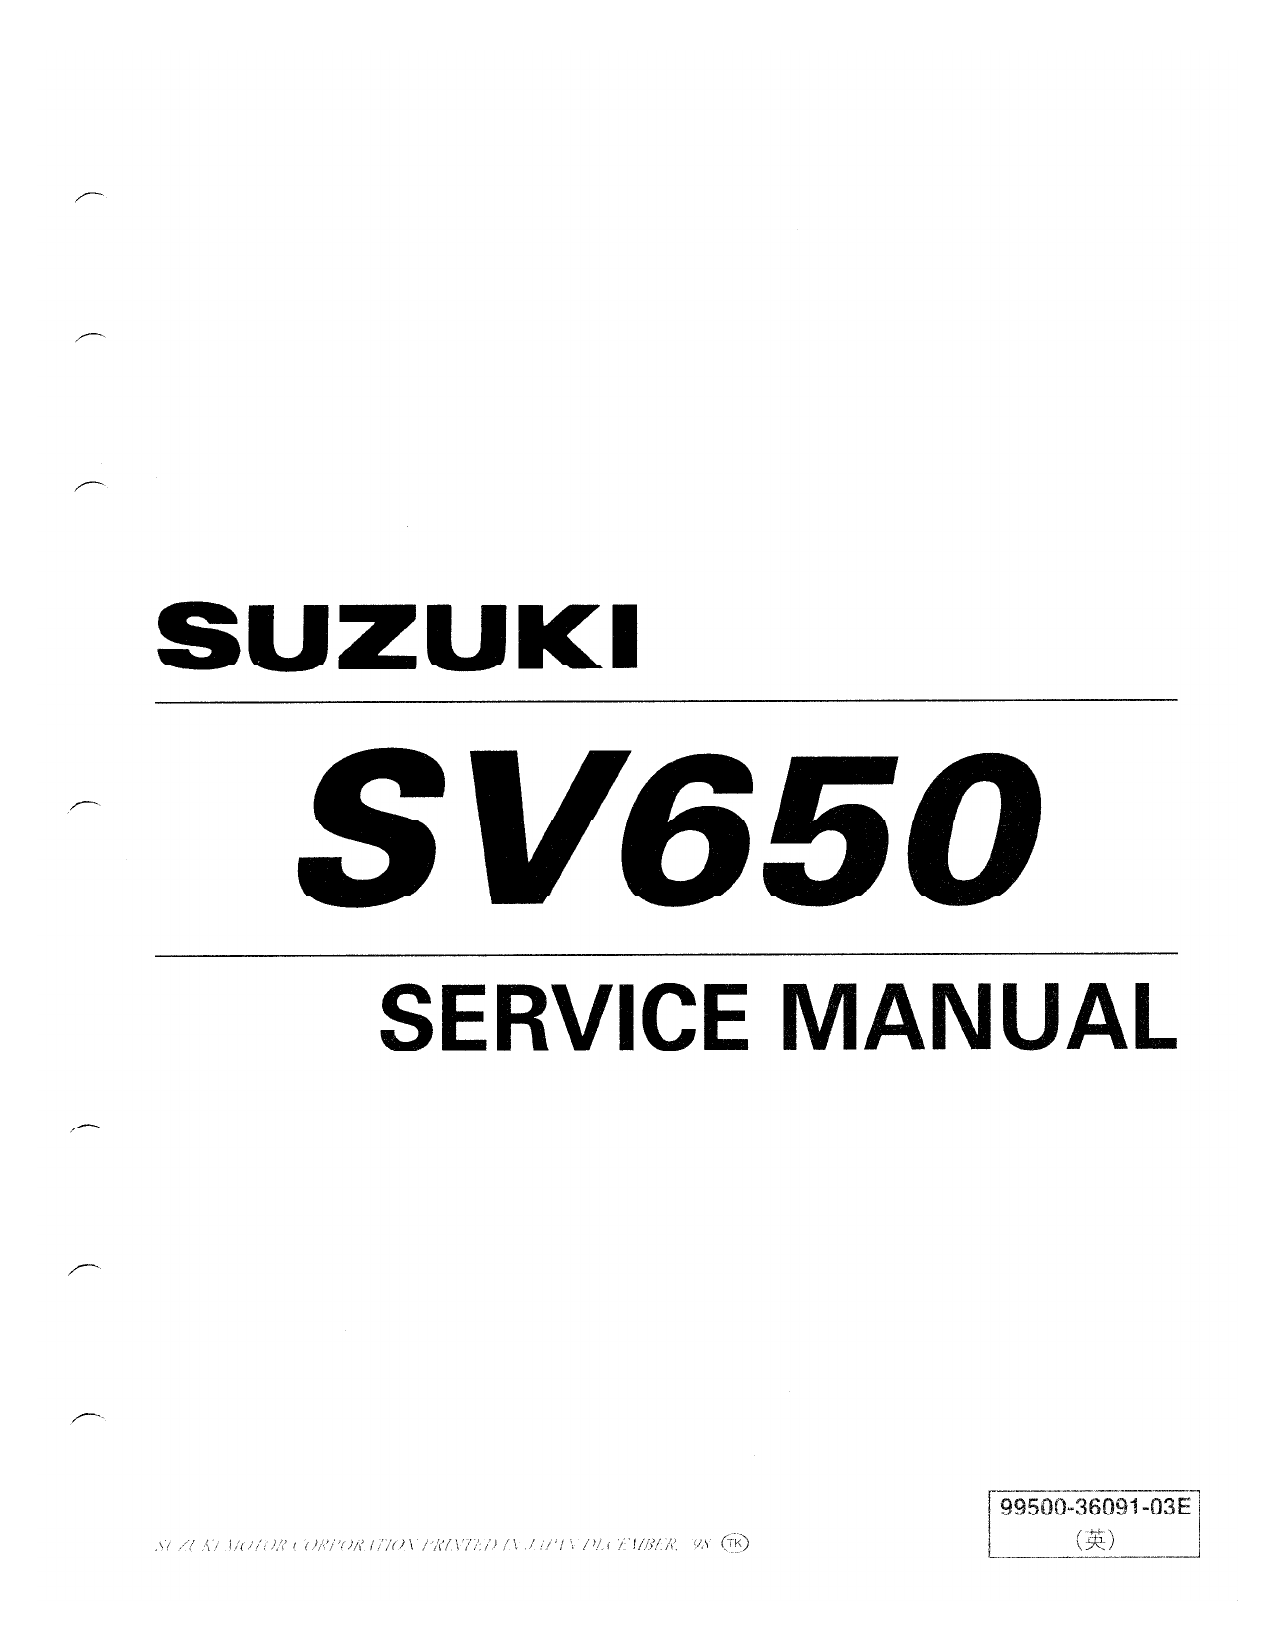 1999-2002 Suzuki SV650 repair, service and shop manual Preview image 1